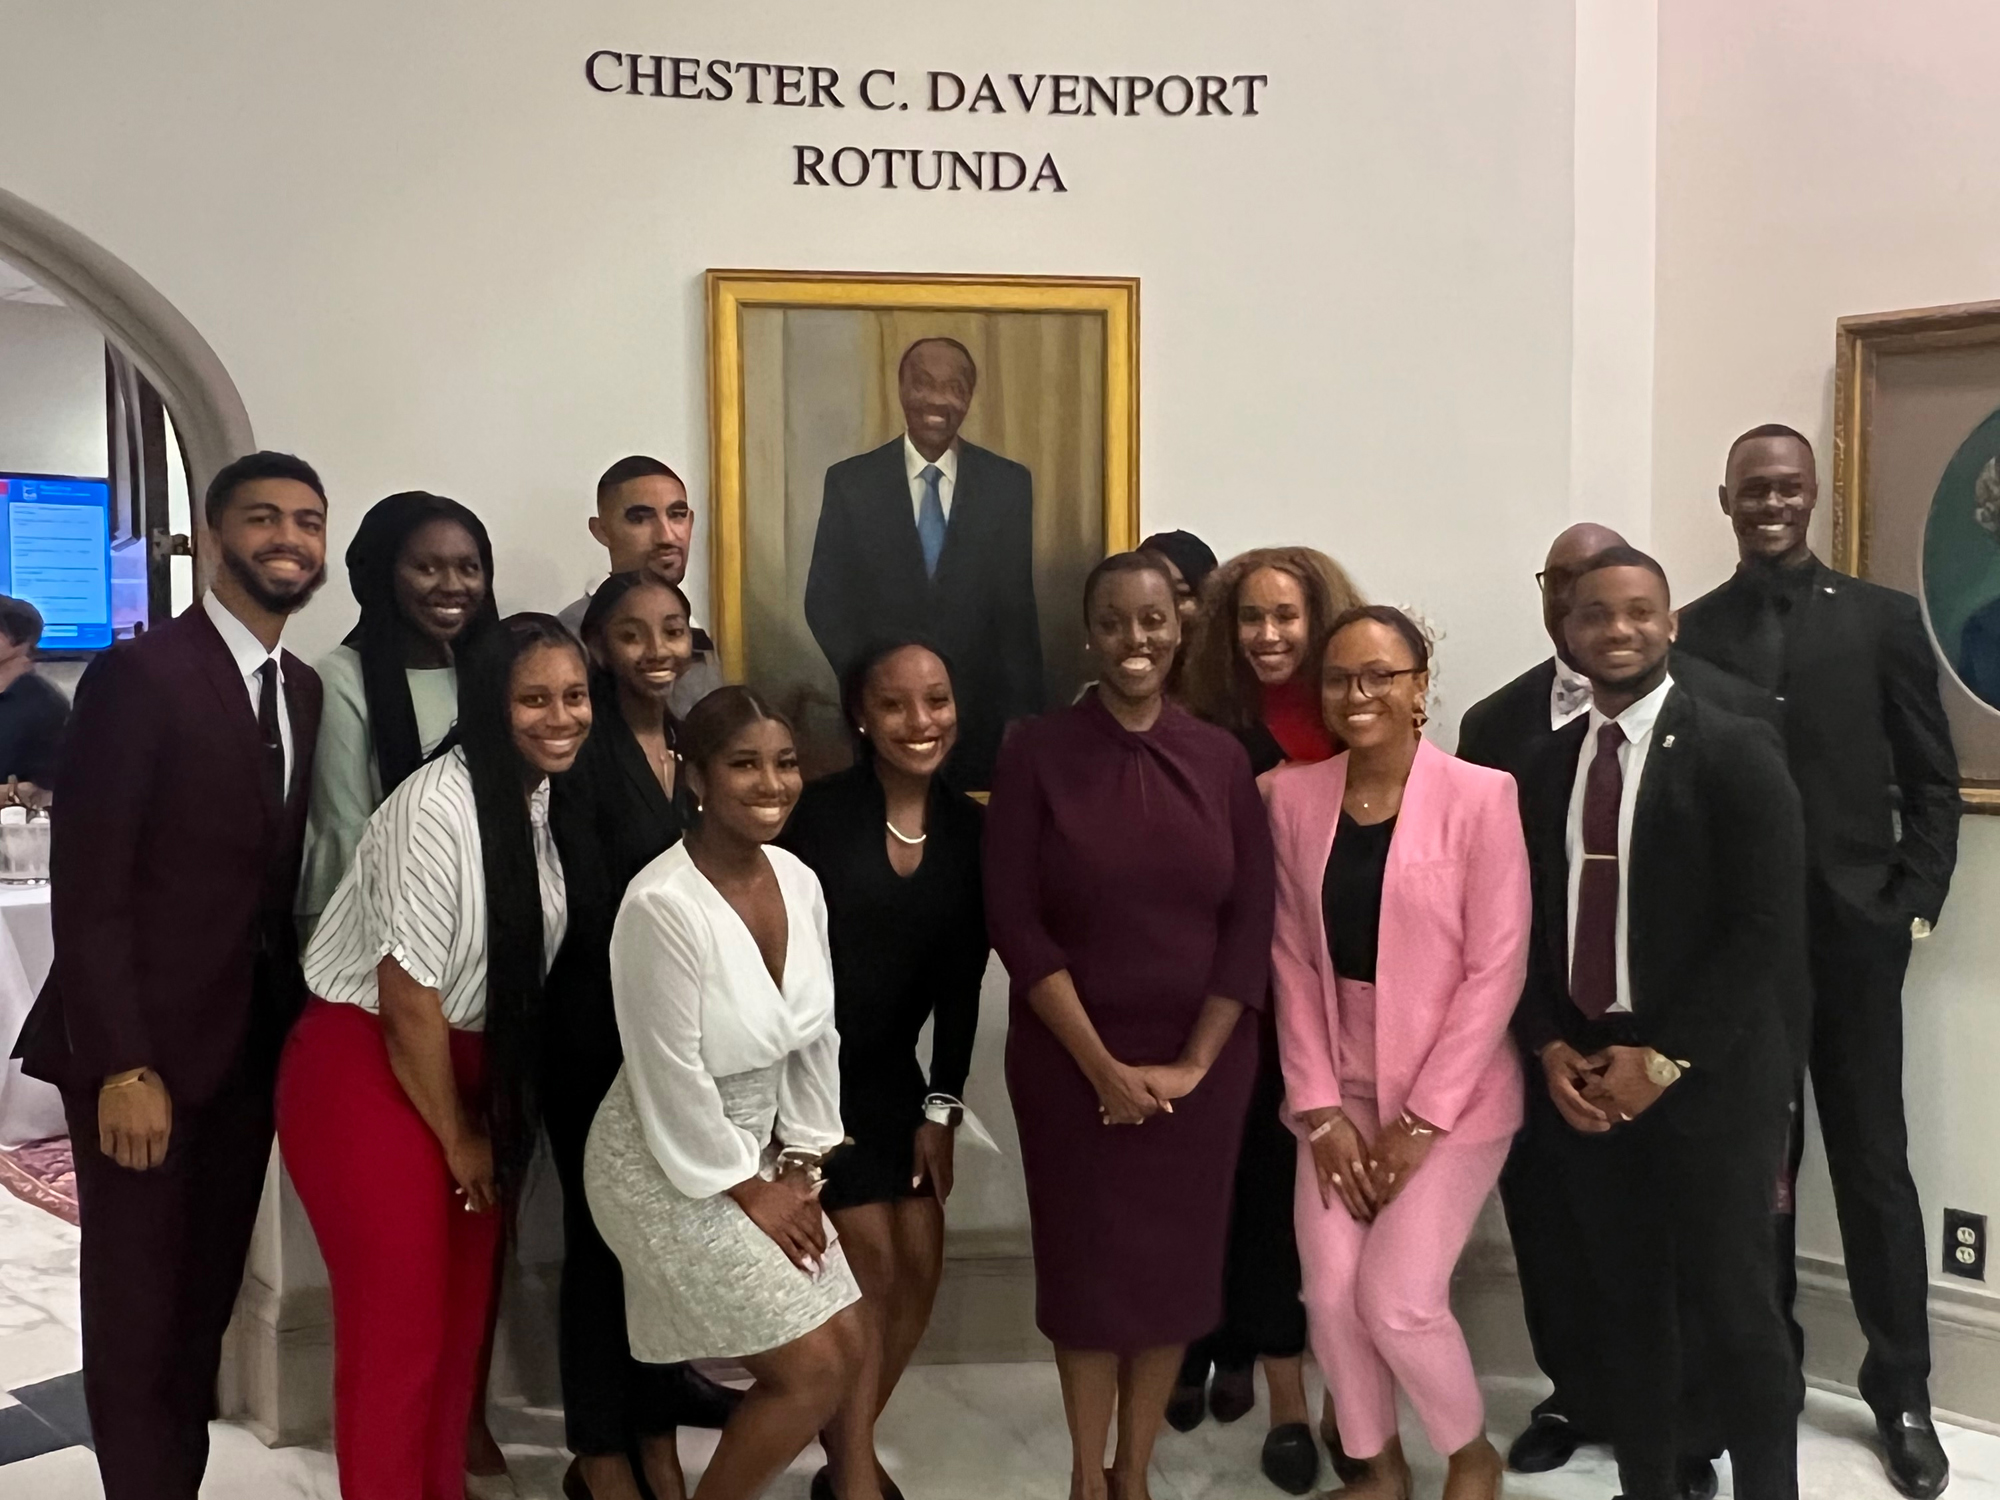 School unveils portrait memorializing first Black graduate